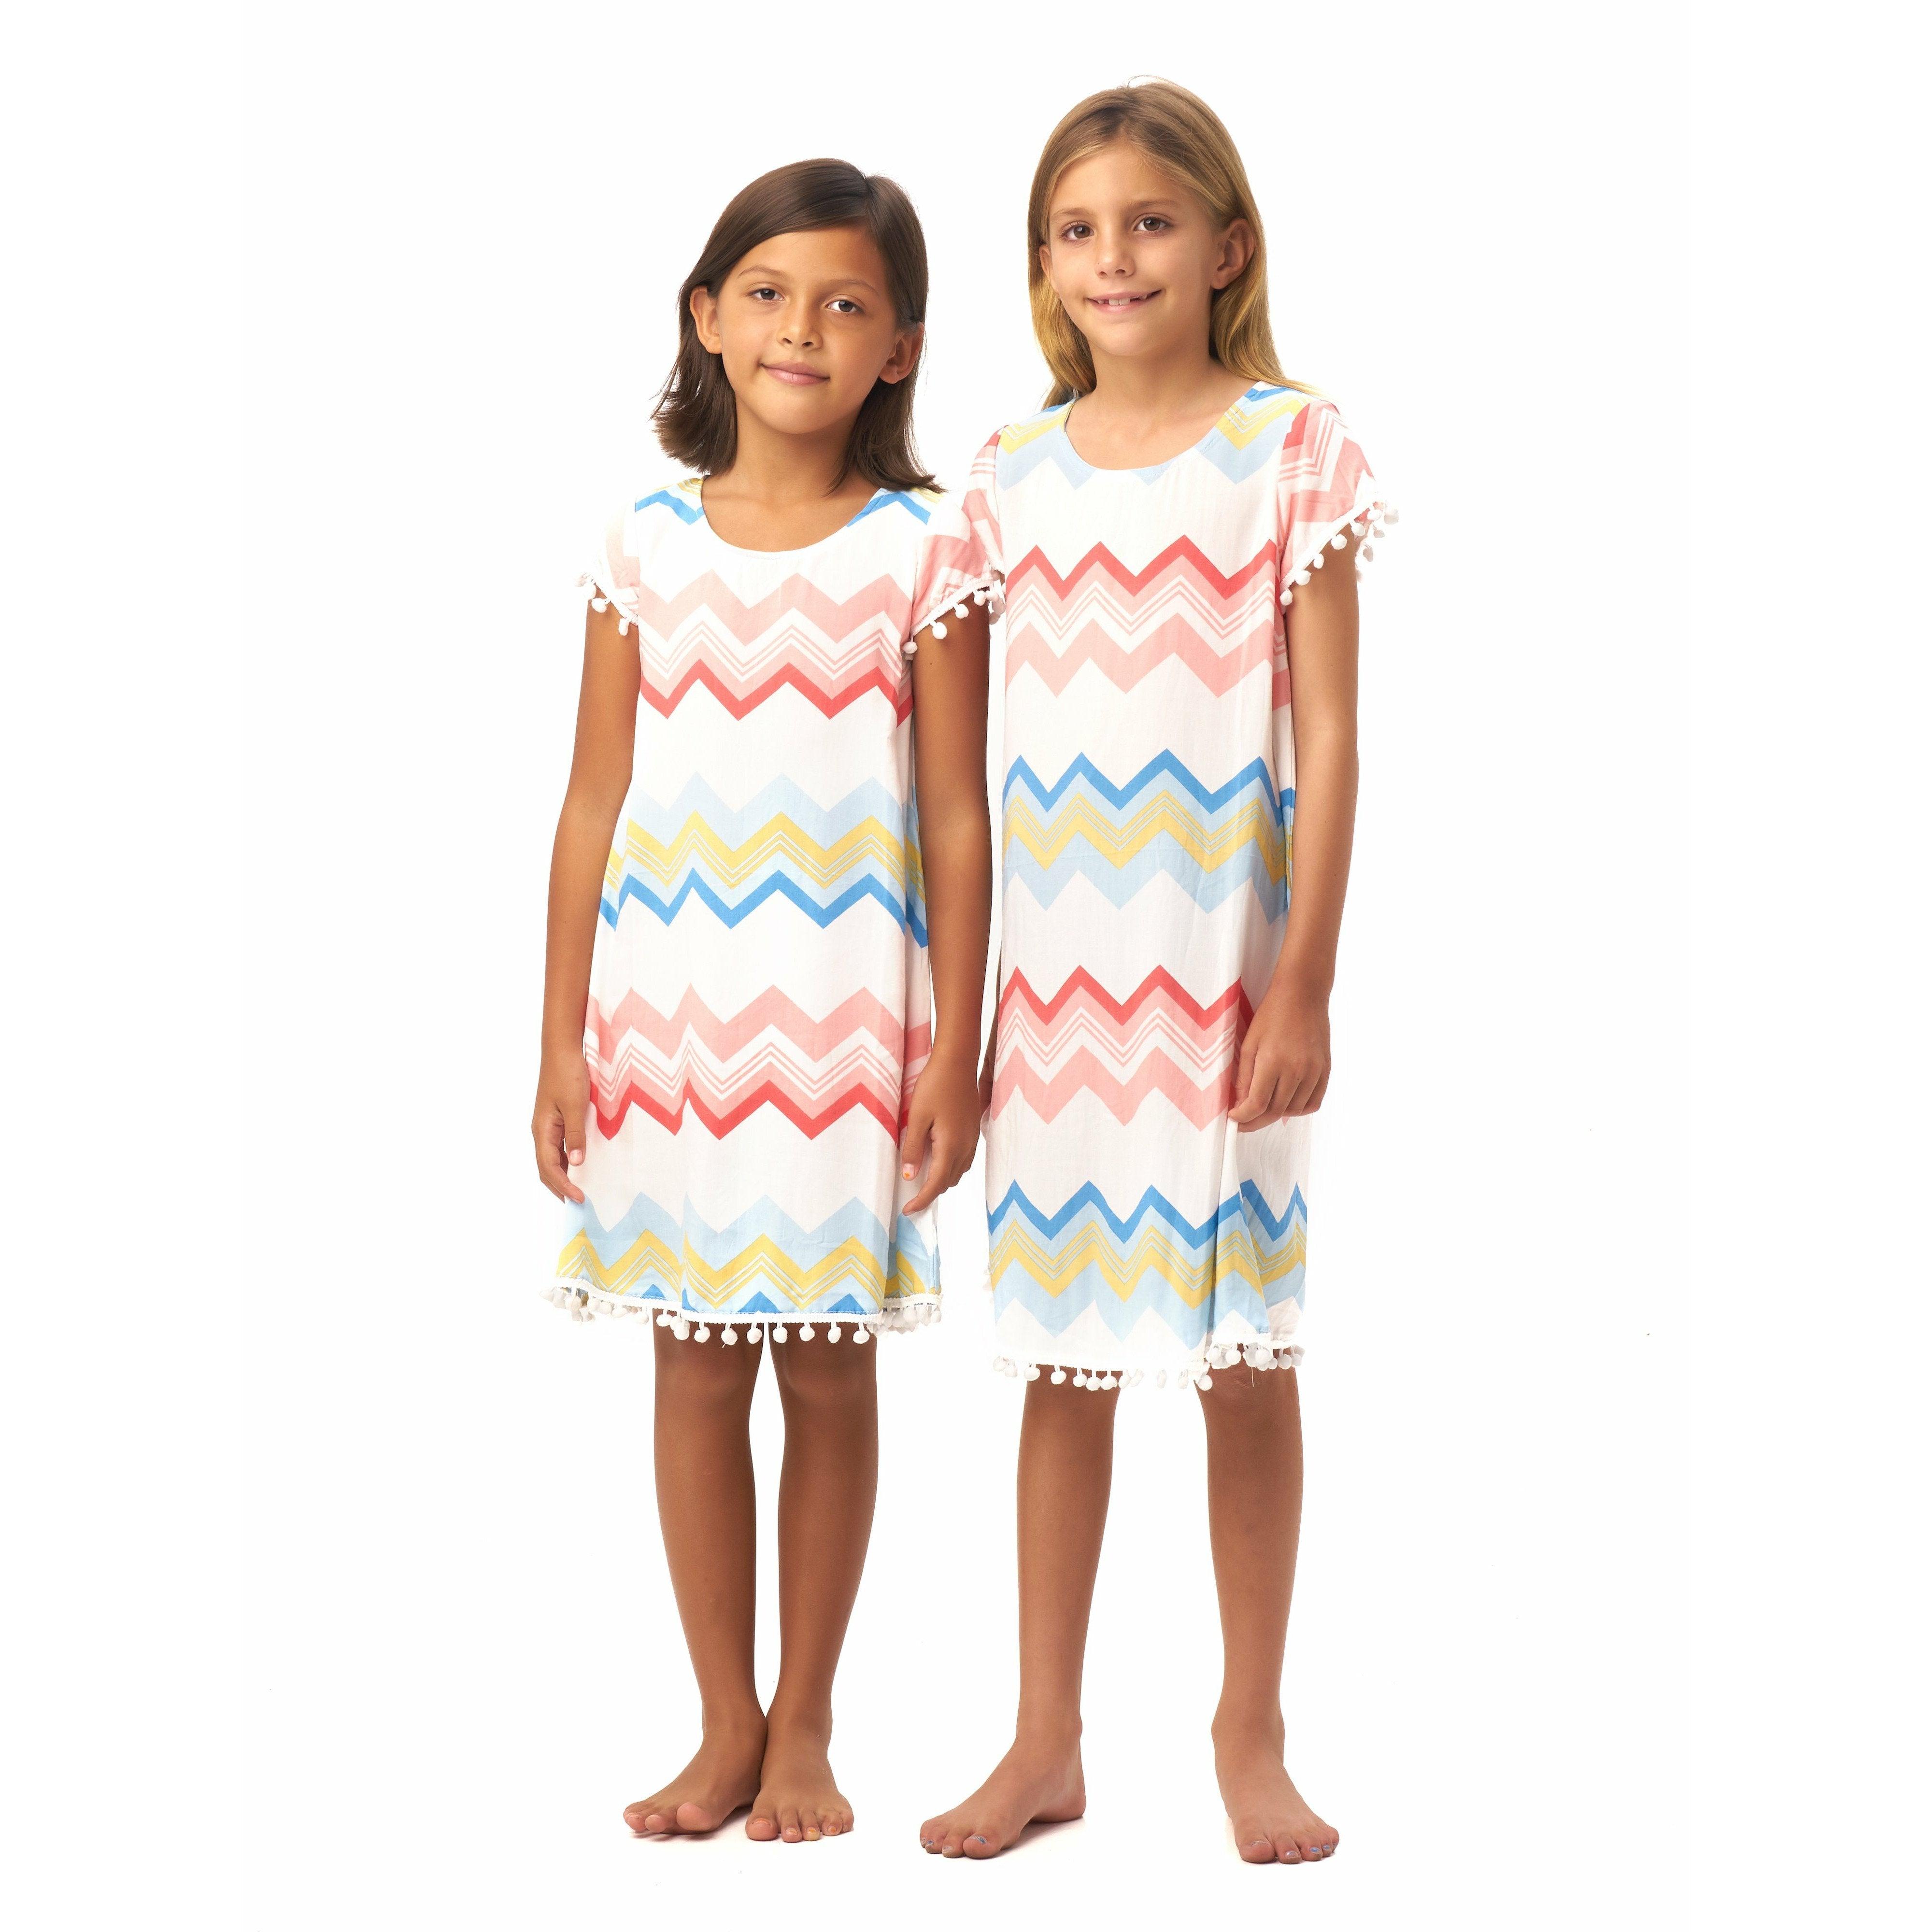 Milan Dress in Colorful Chevron - Indigo Kids